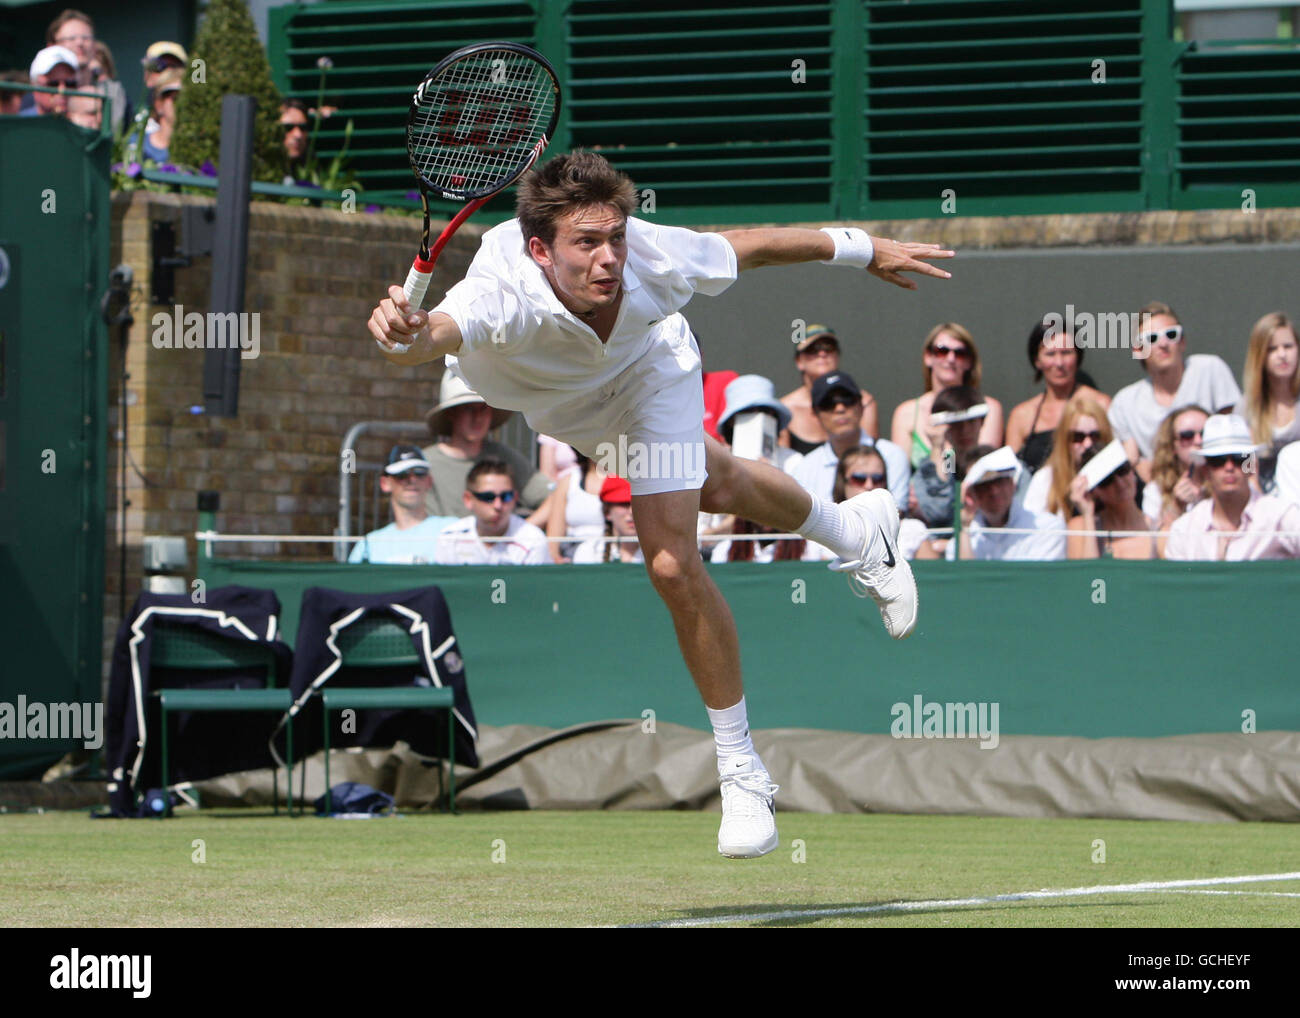 Mahut x Isner em Wimbledon 2010 – Wikipédia, a enciclopédia livre